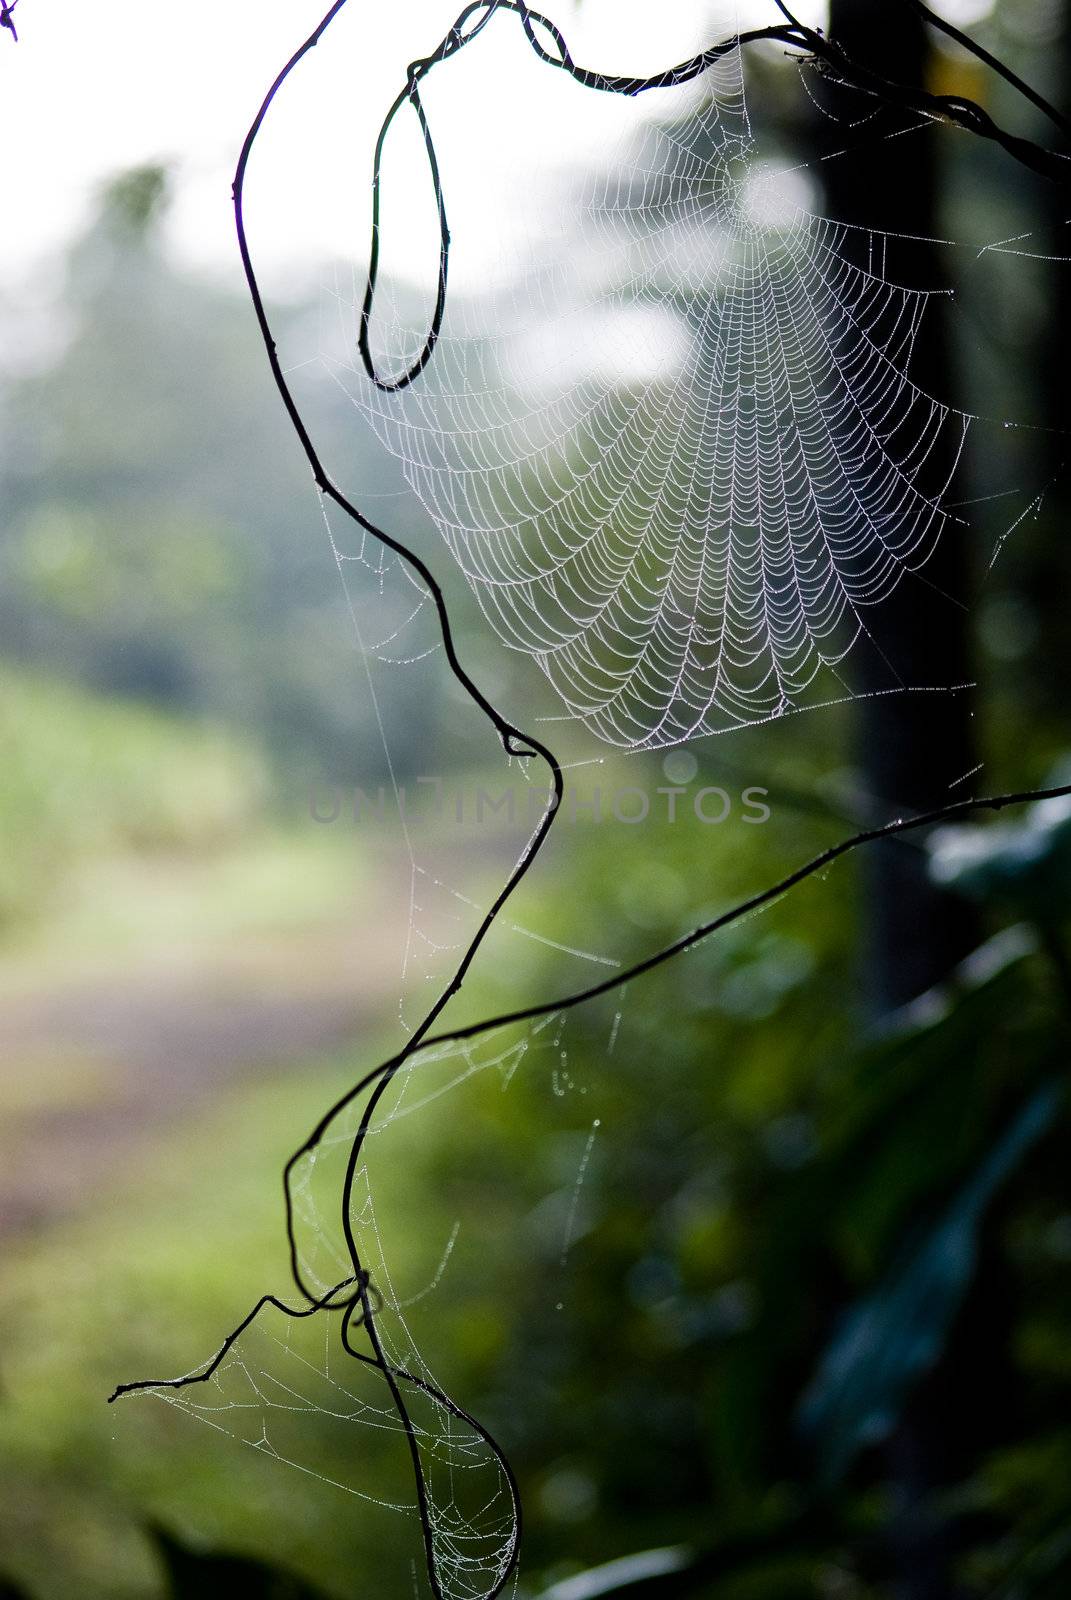 Spider web in backlighting.